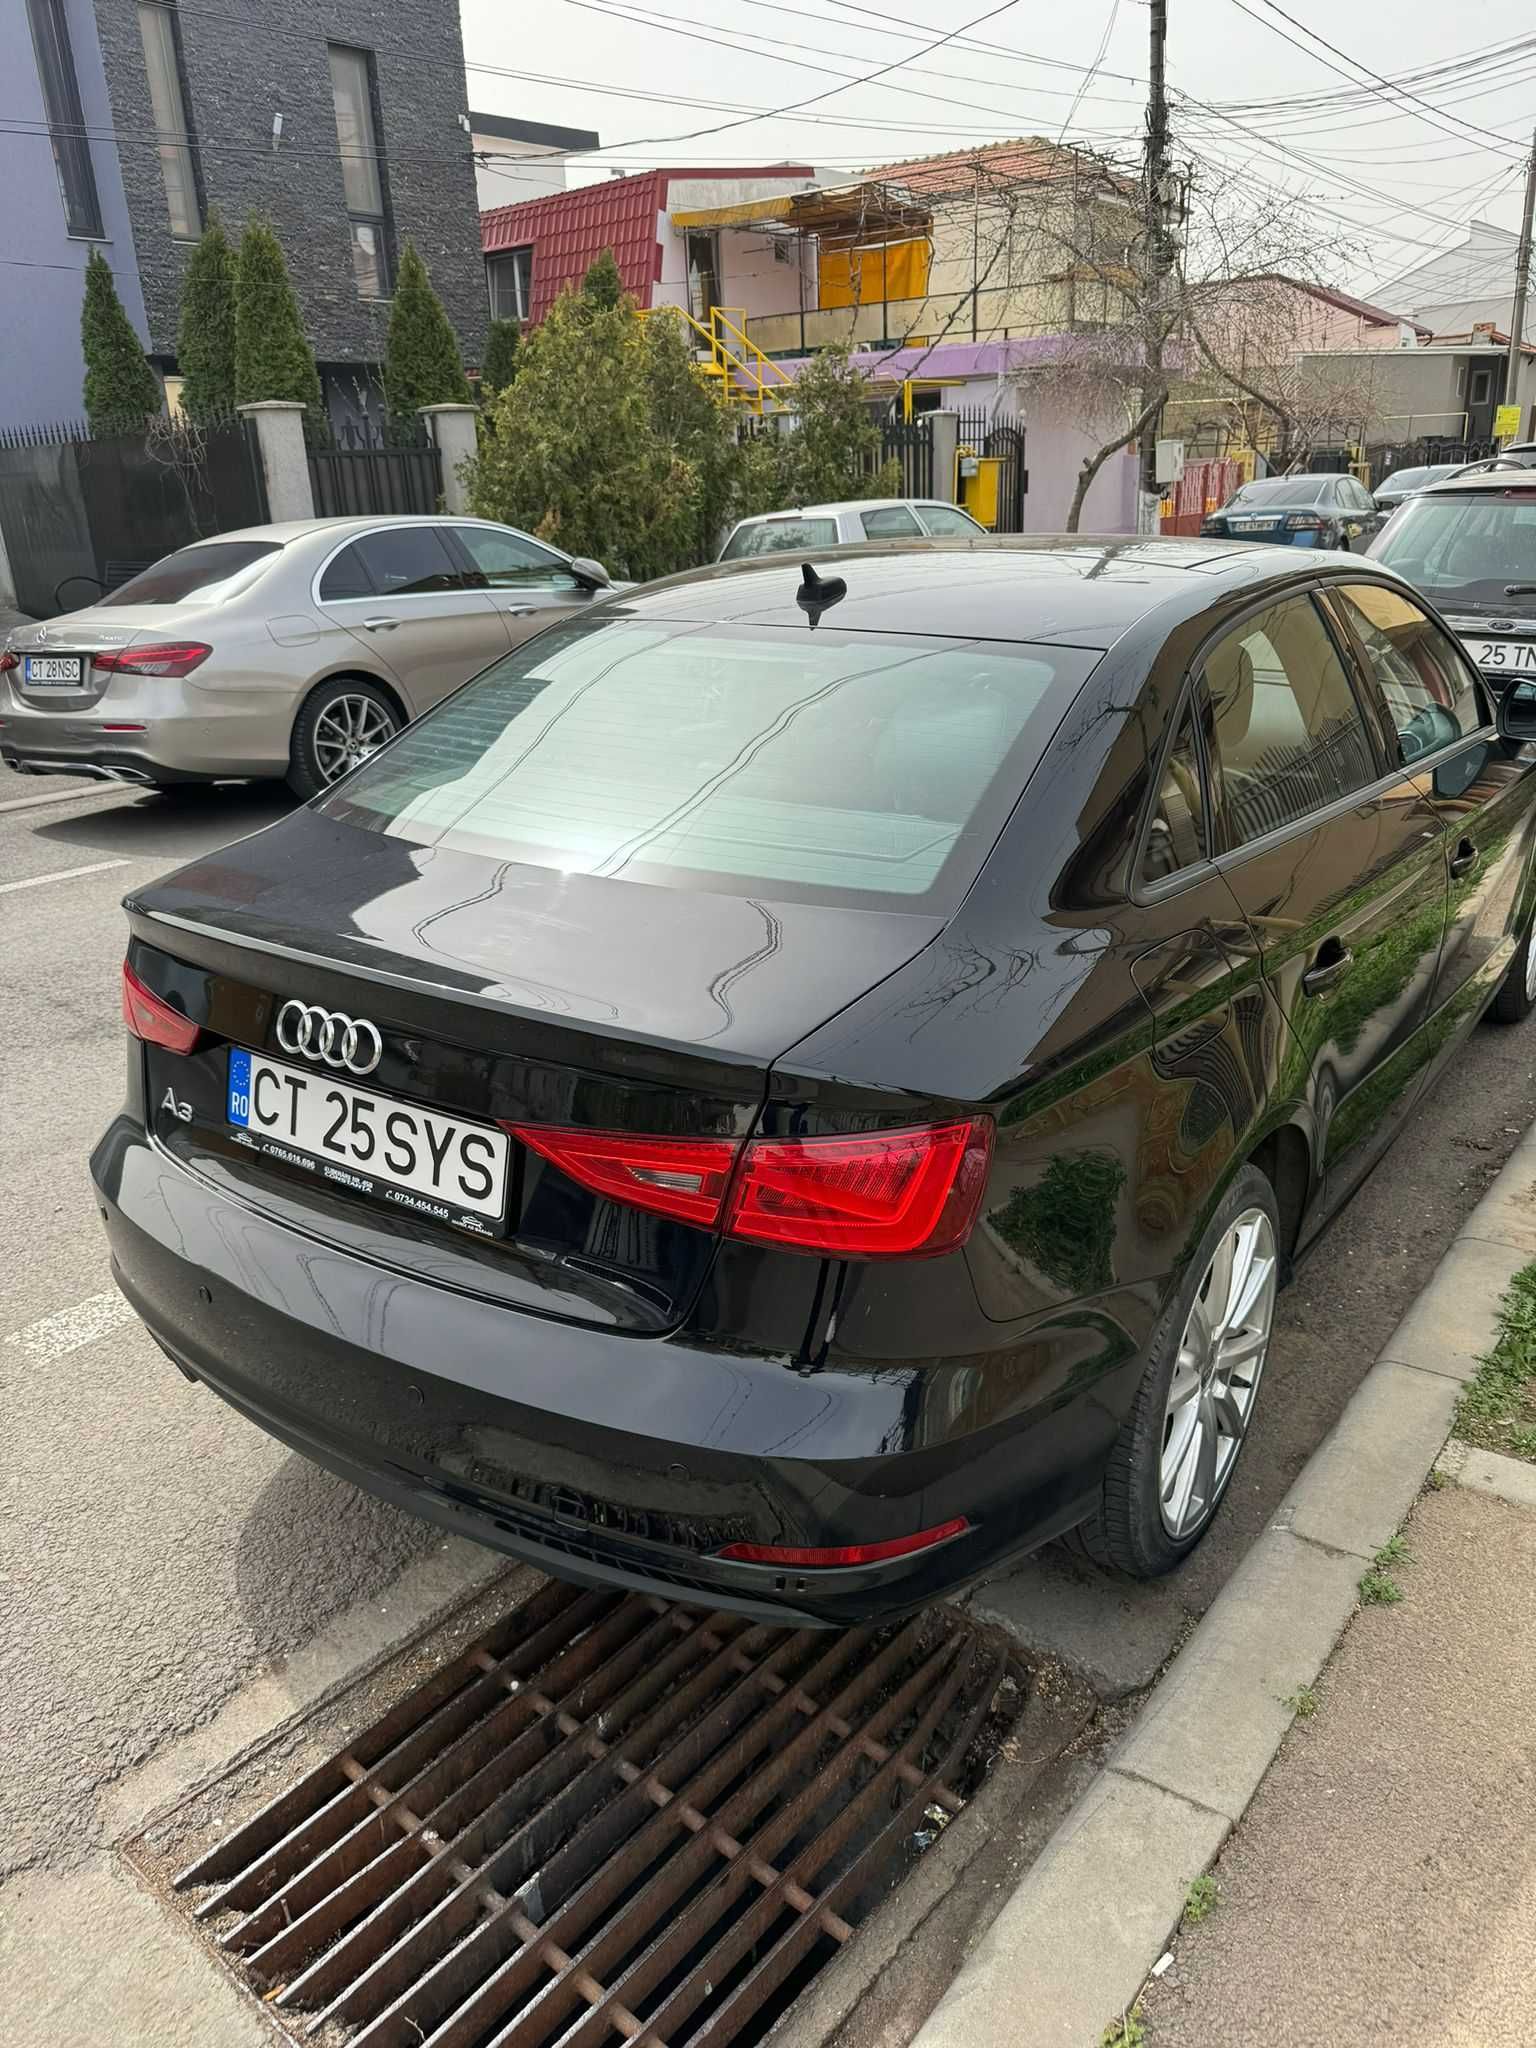 Audi A3 sedan, 2015, 121000km, 170 CP, automata, benzina.